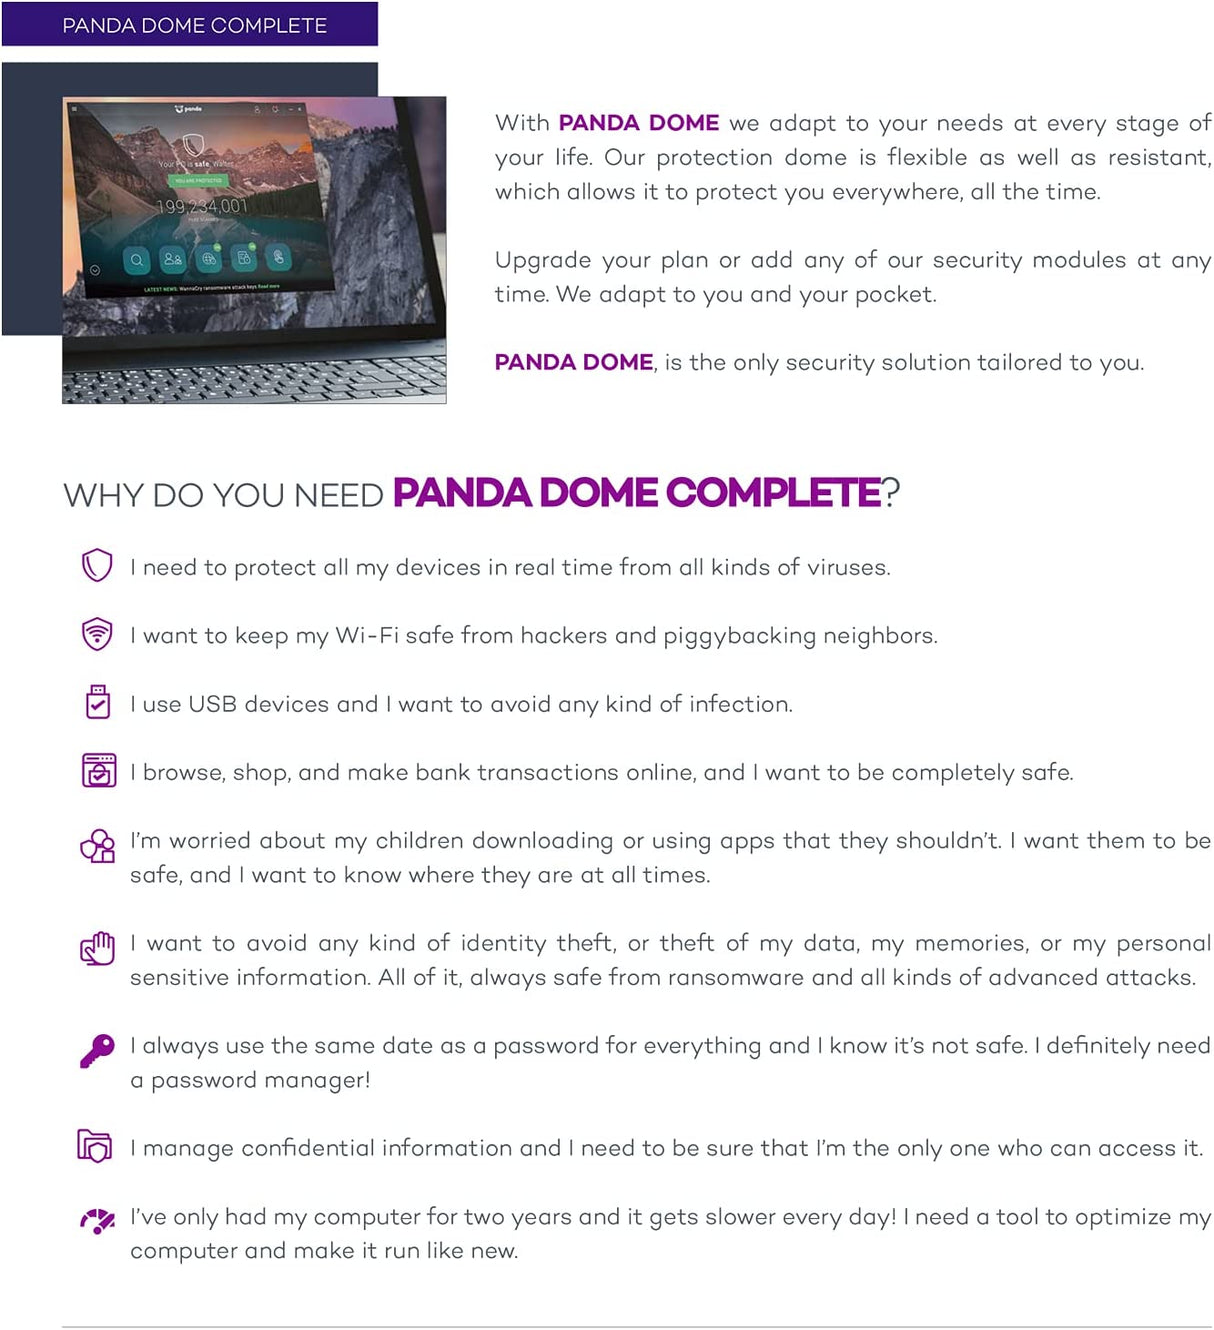 WatchGuard Panda Dome Complete - 1 Year - 5 Licenses (WGDOC031)